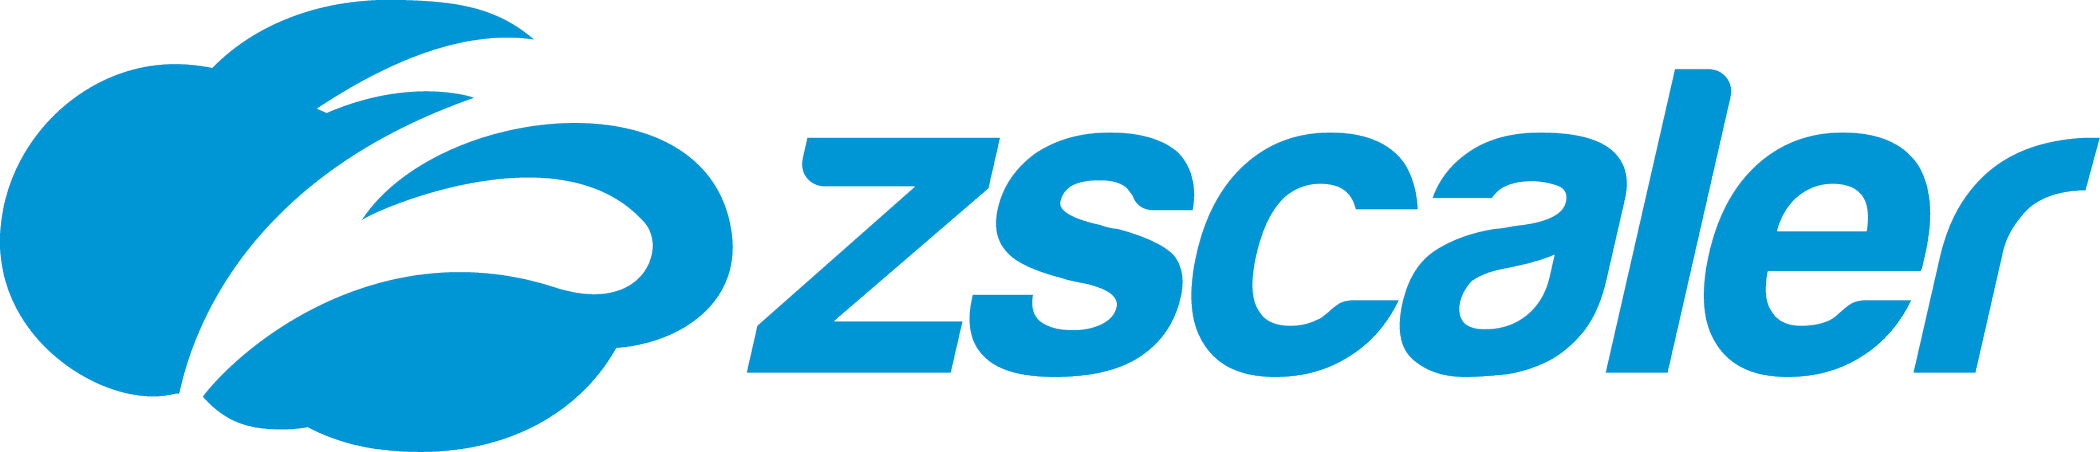 Zscaler Logo Vector Eps Free Download, Logo, Icons, - Zscaler Inc Logo (2100x452)